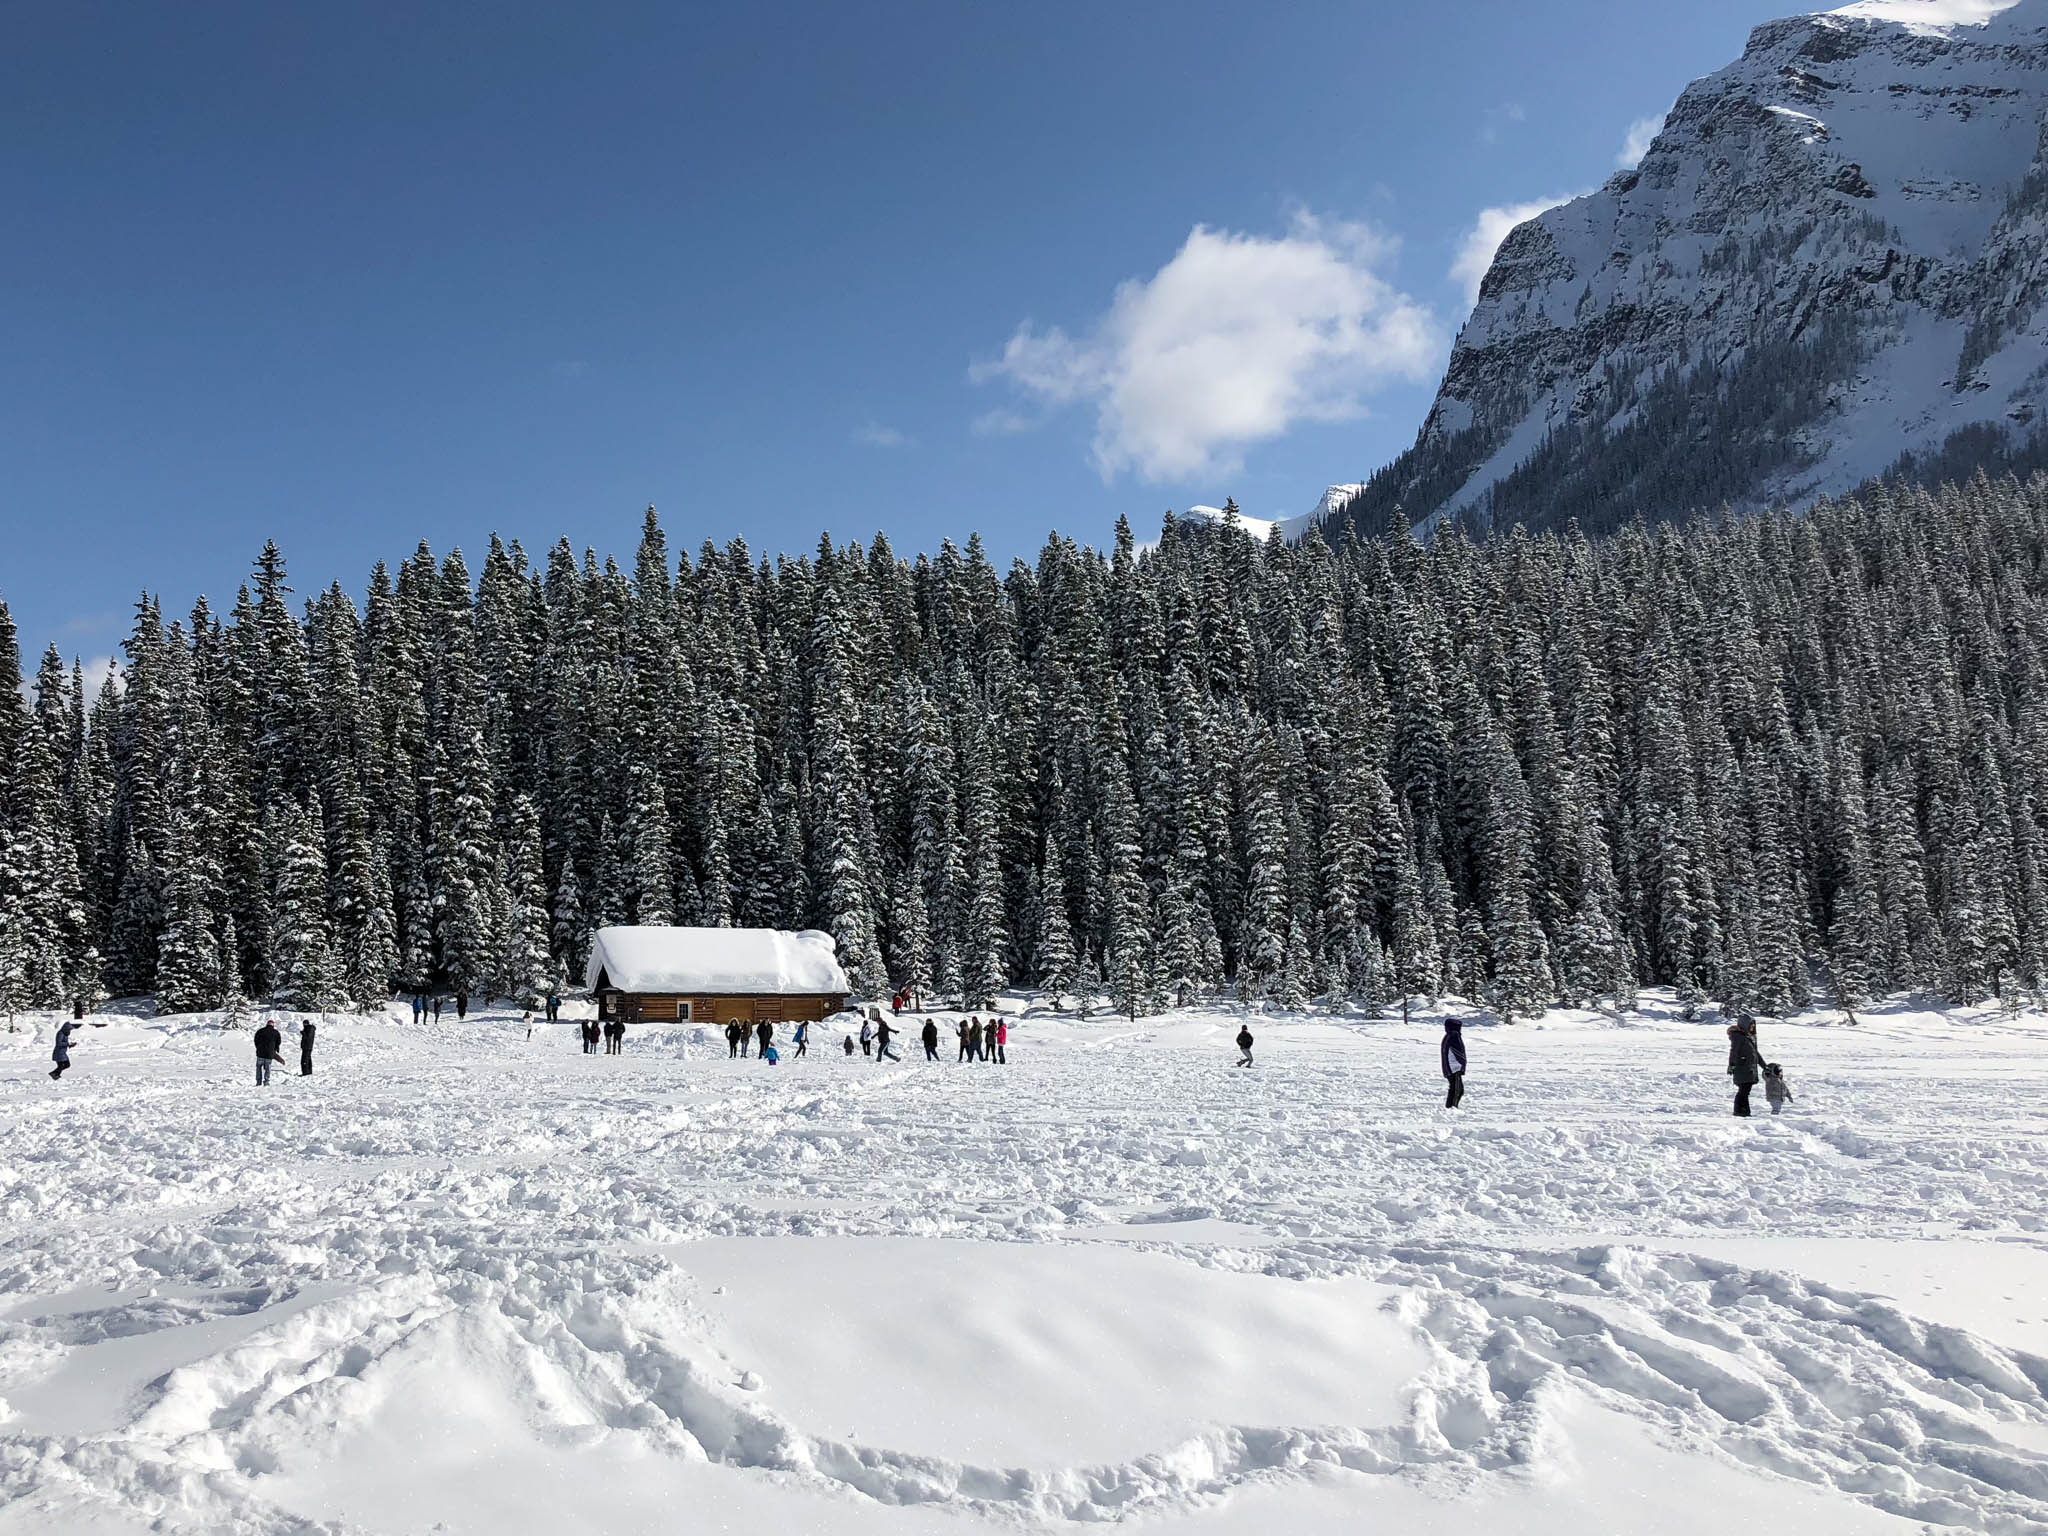 12-day Banff winter wonderland itinerary: Ski & see the best